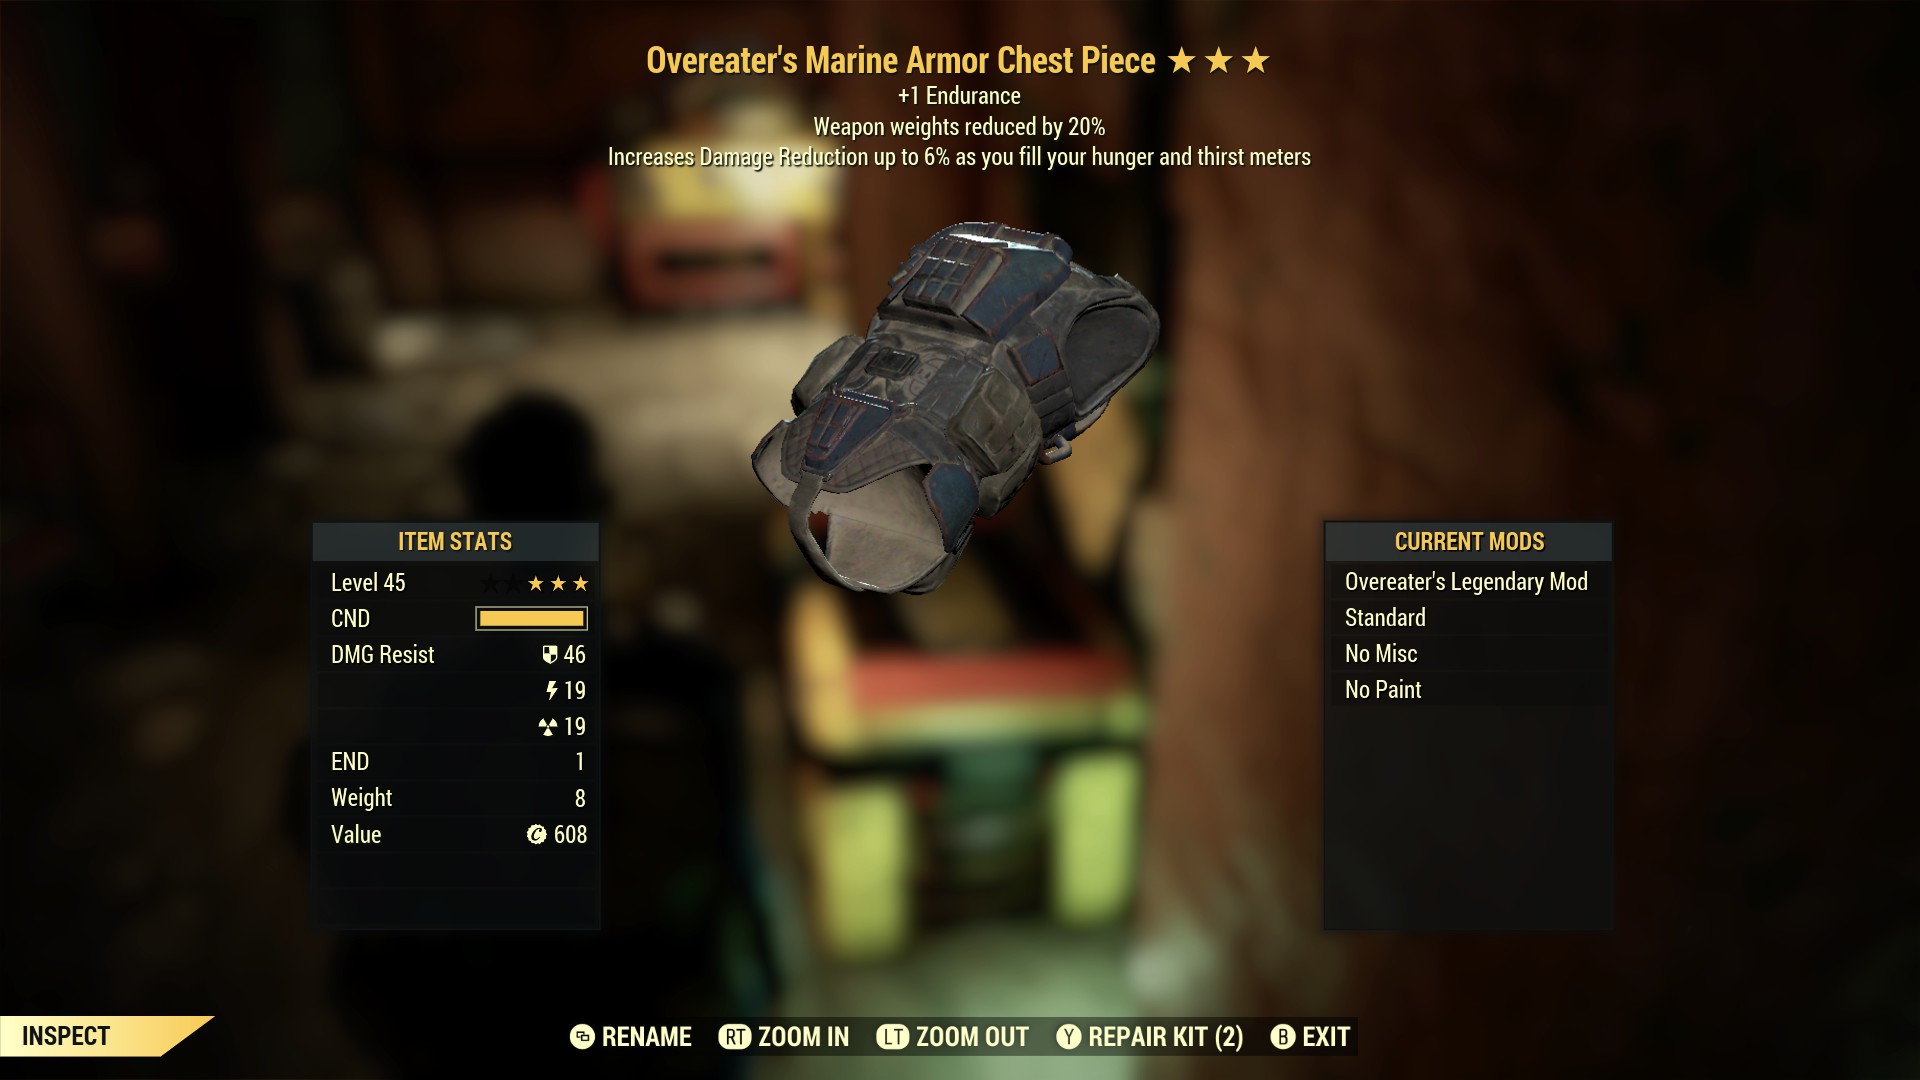 Overeater's Marine Armor Chest Piece